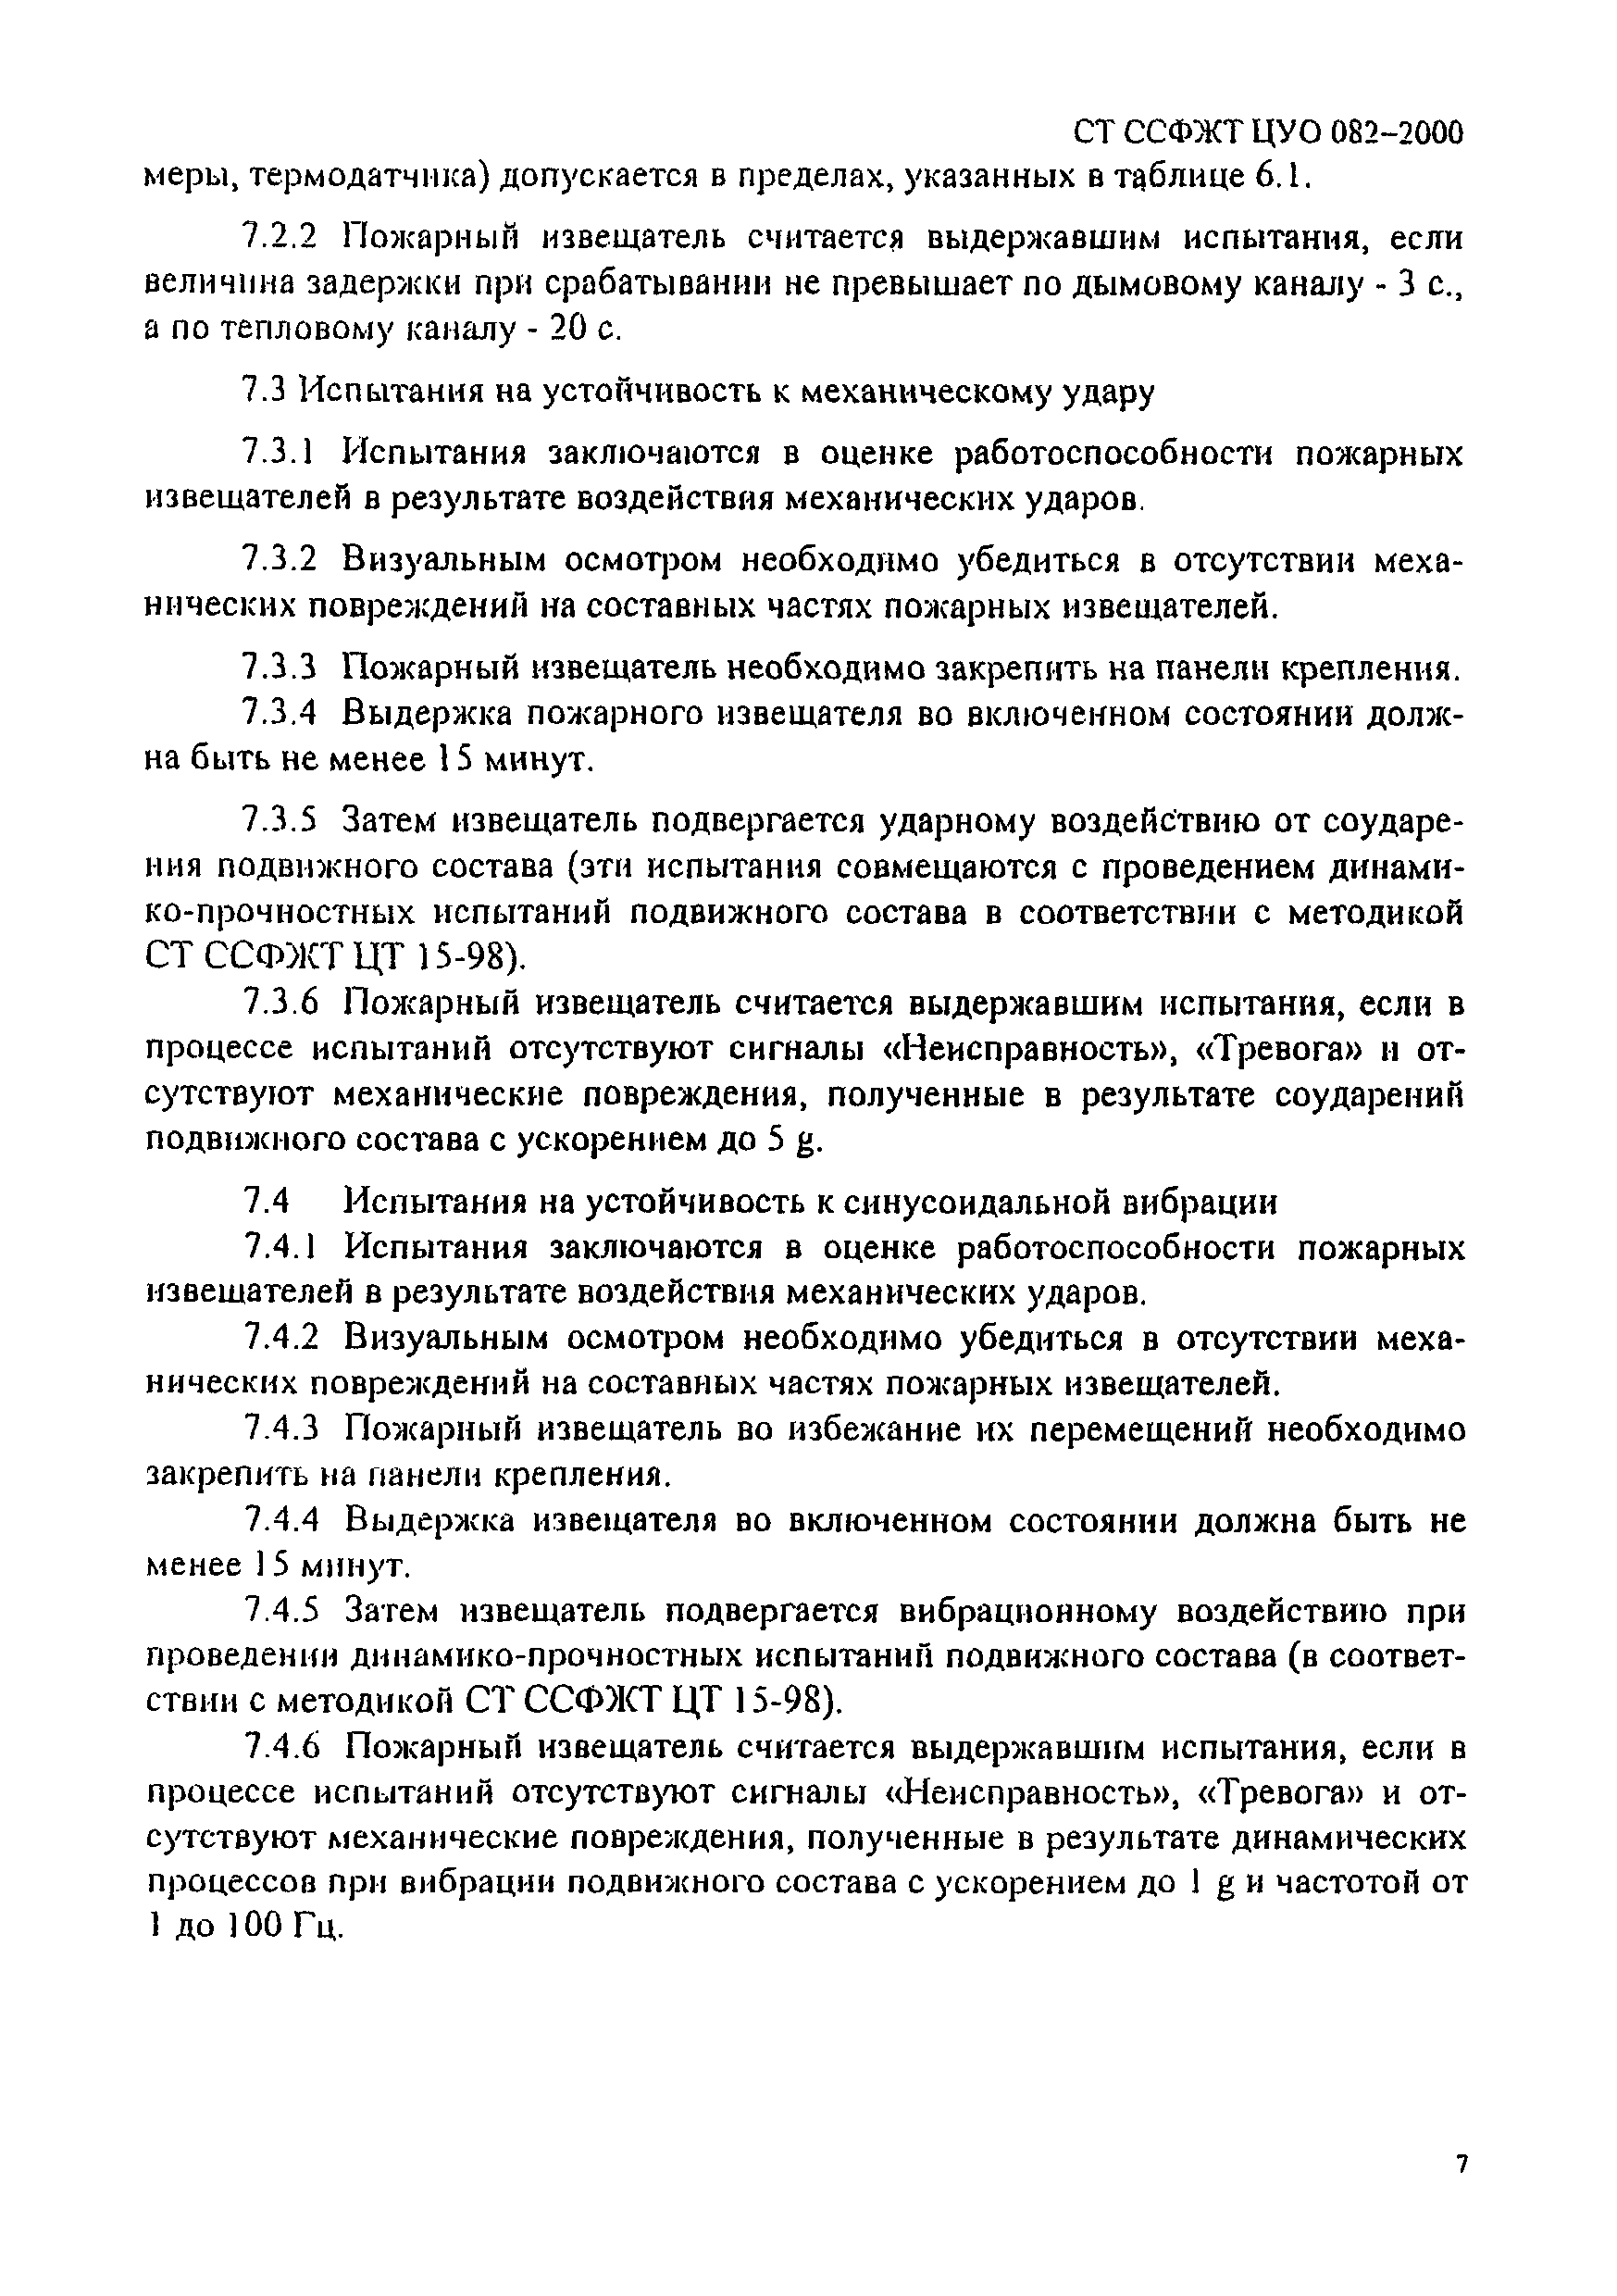 СТ ССФЖТ ЦУО 082-2000